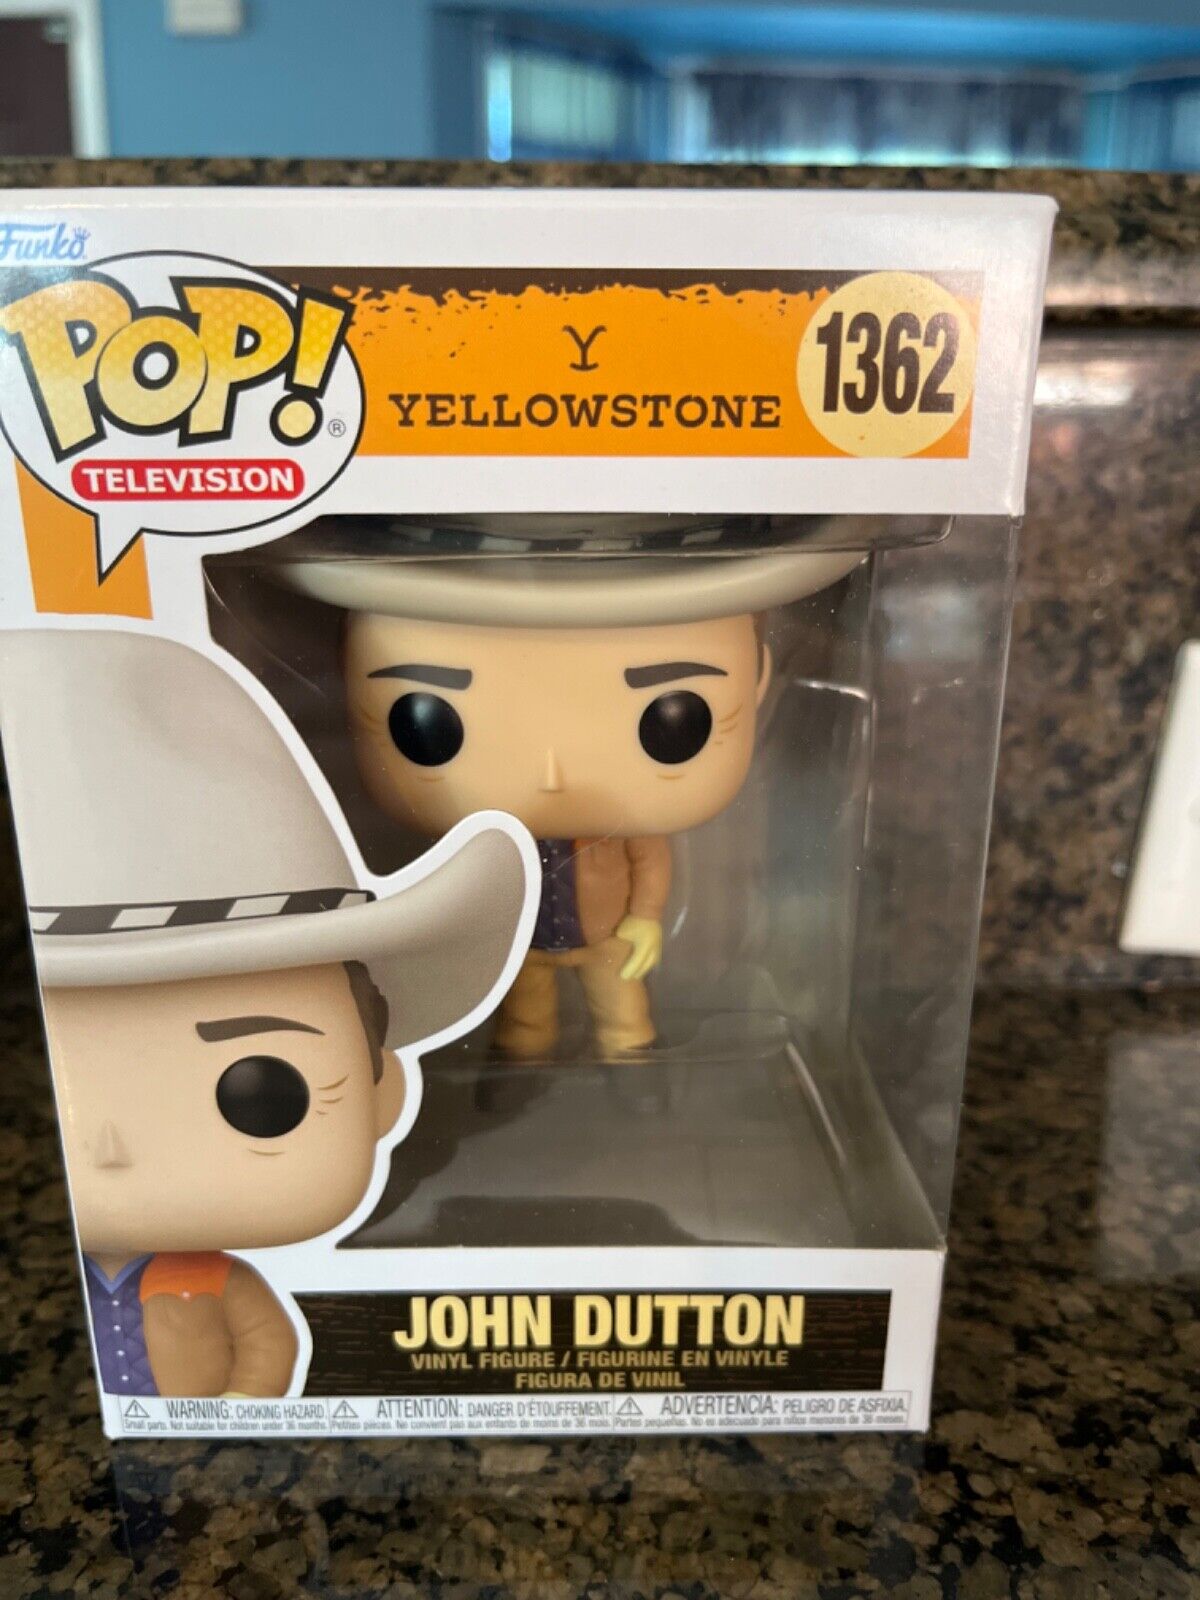 FUNKO POP TELEVISION: Yellowstone- John Dutton [New Toy] Vinyl Figure 1362